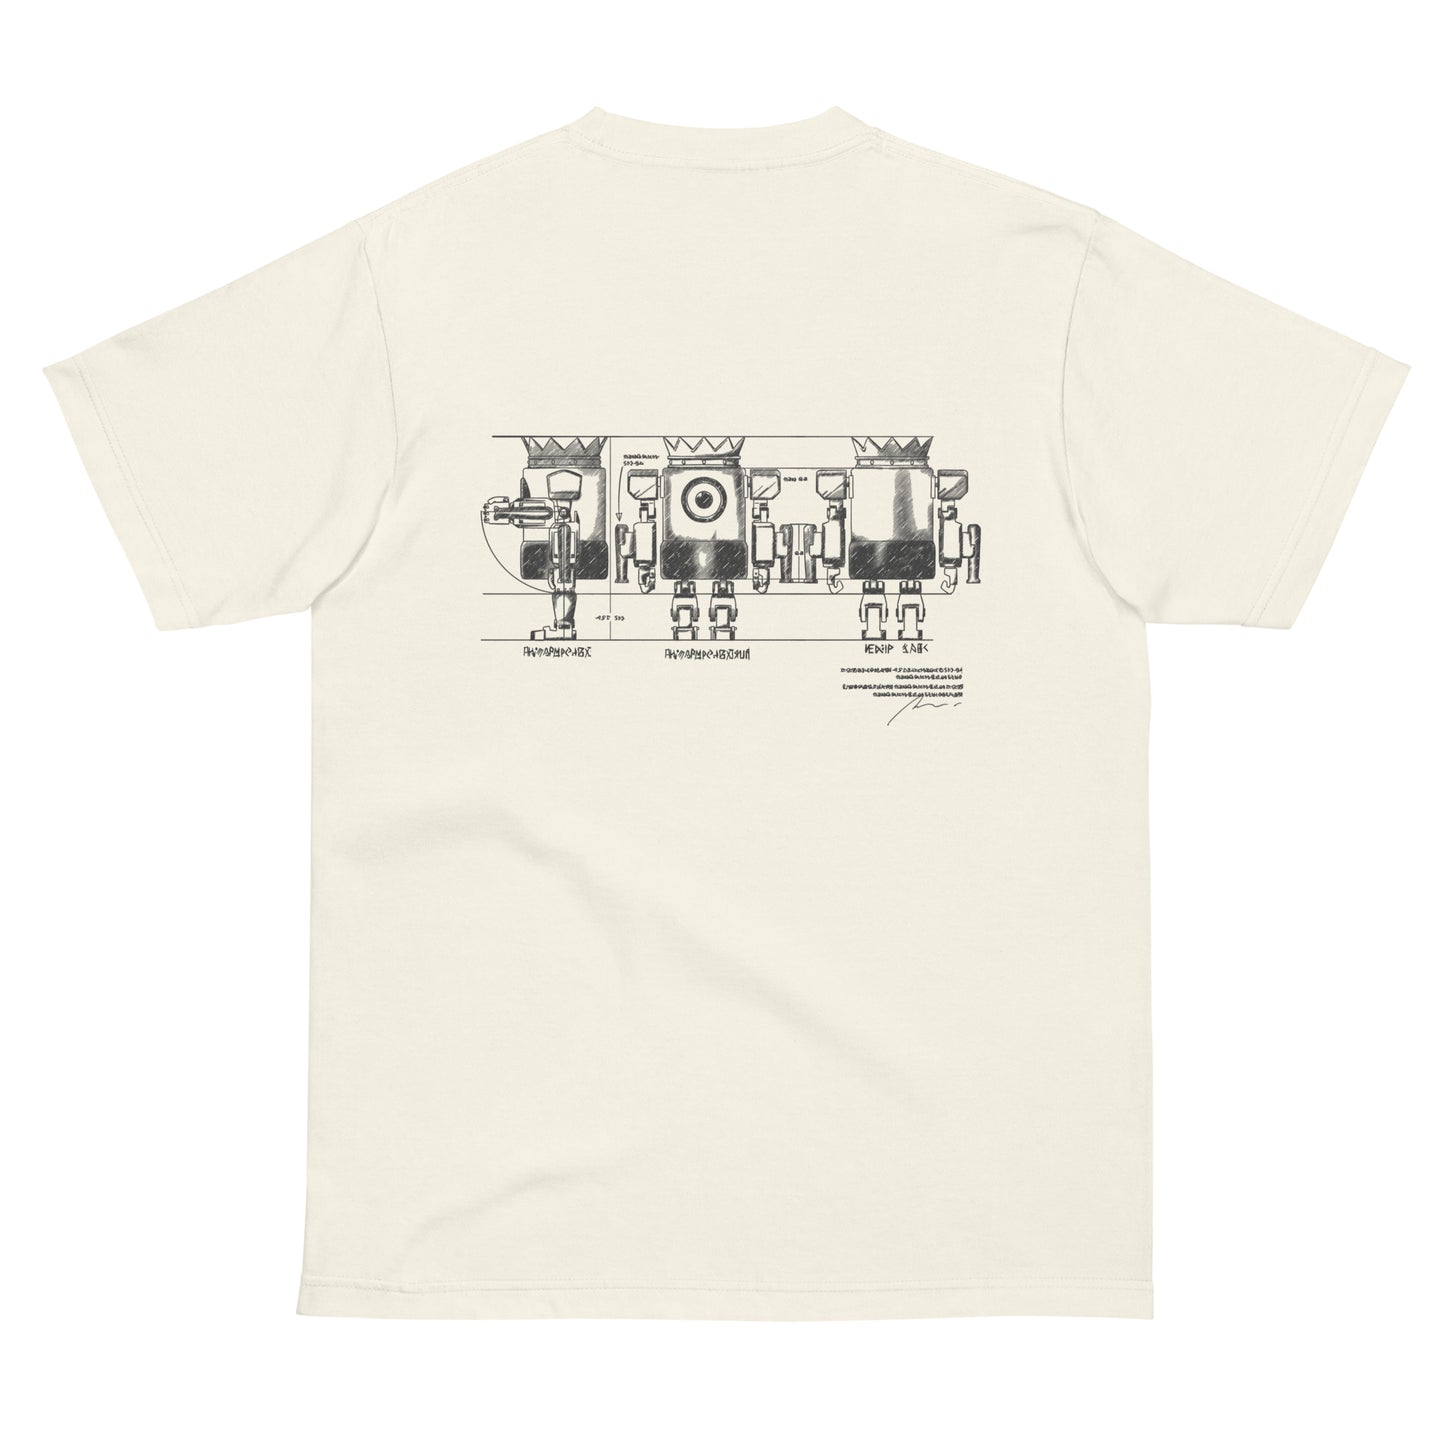 XOBOT KING 設計図Tシャツ